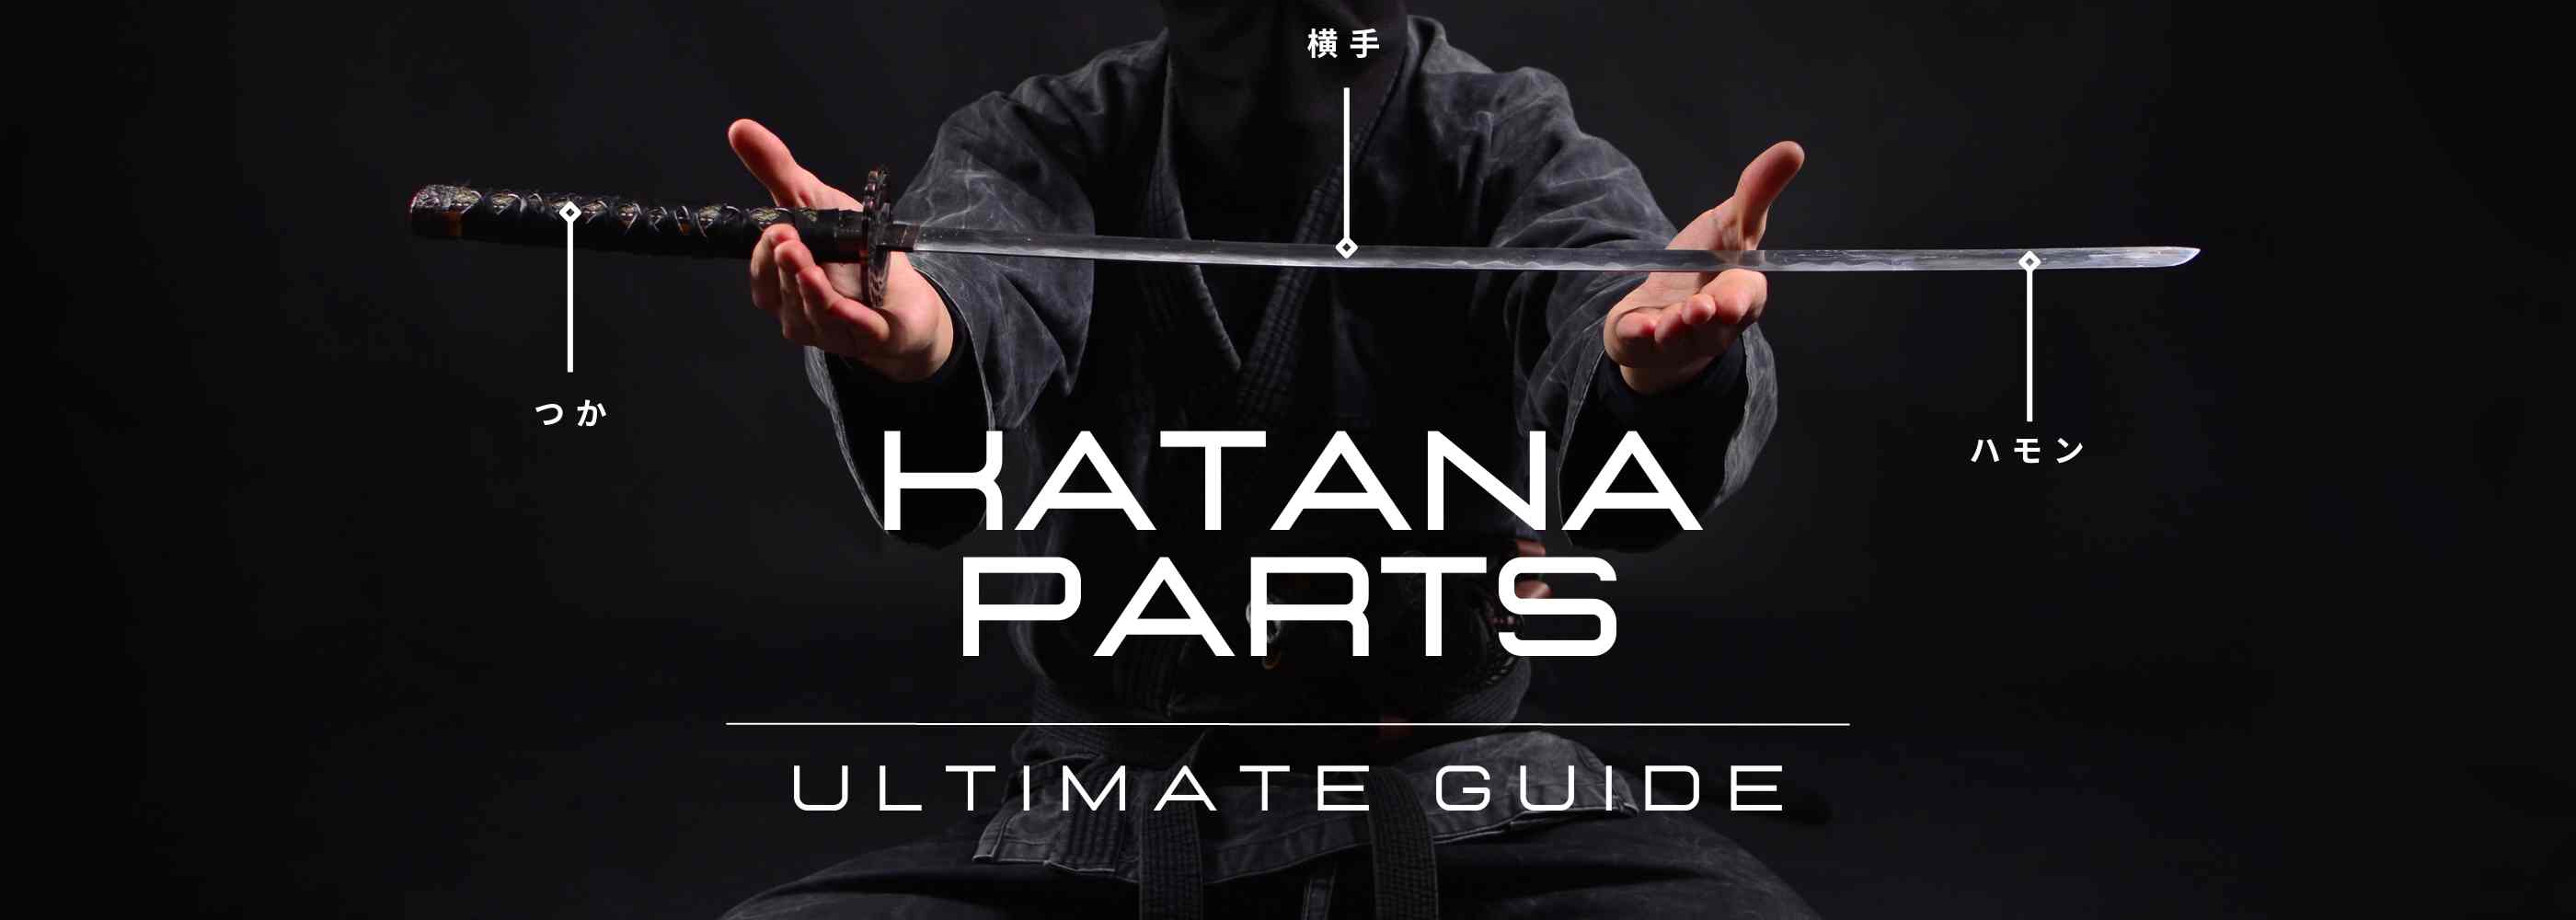 katana parts